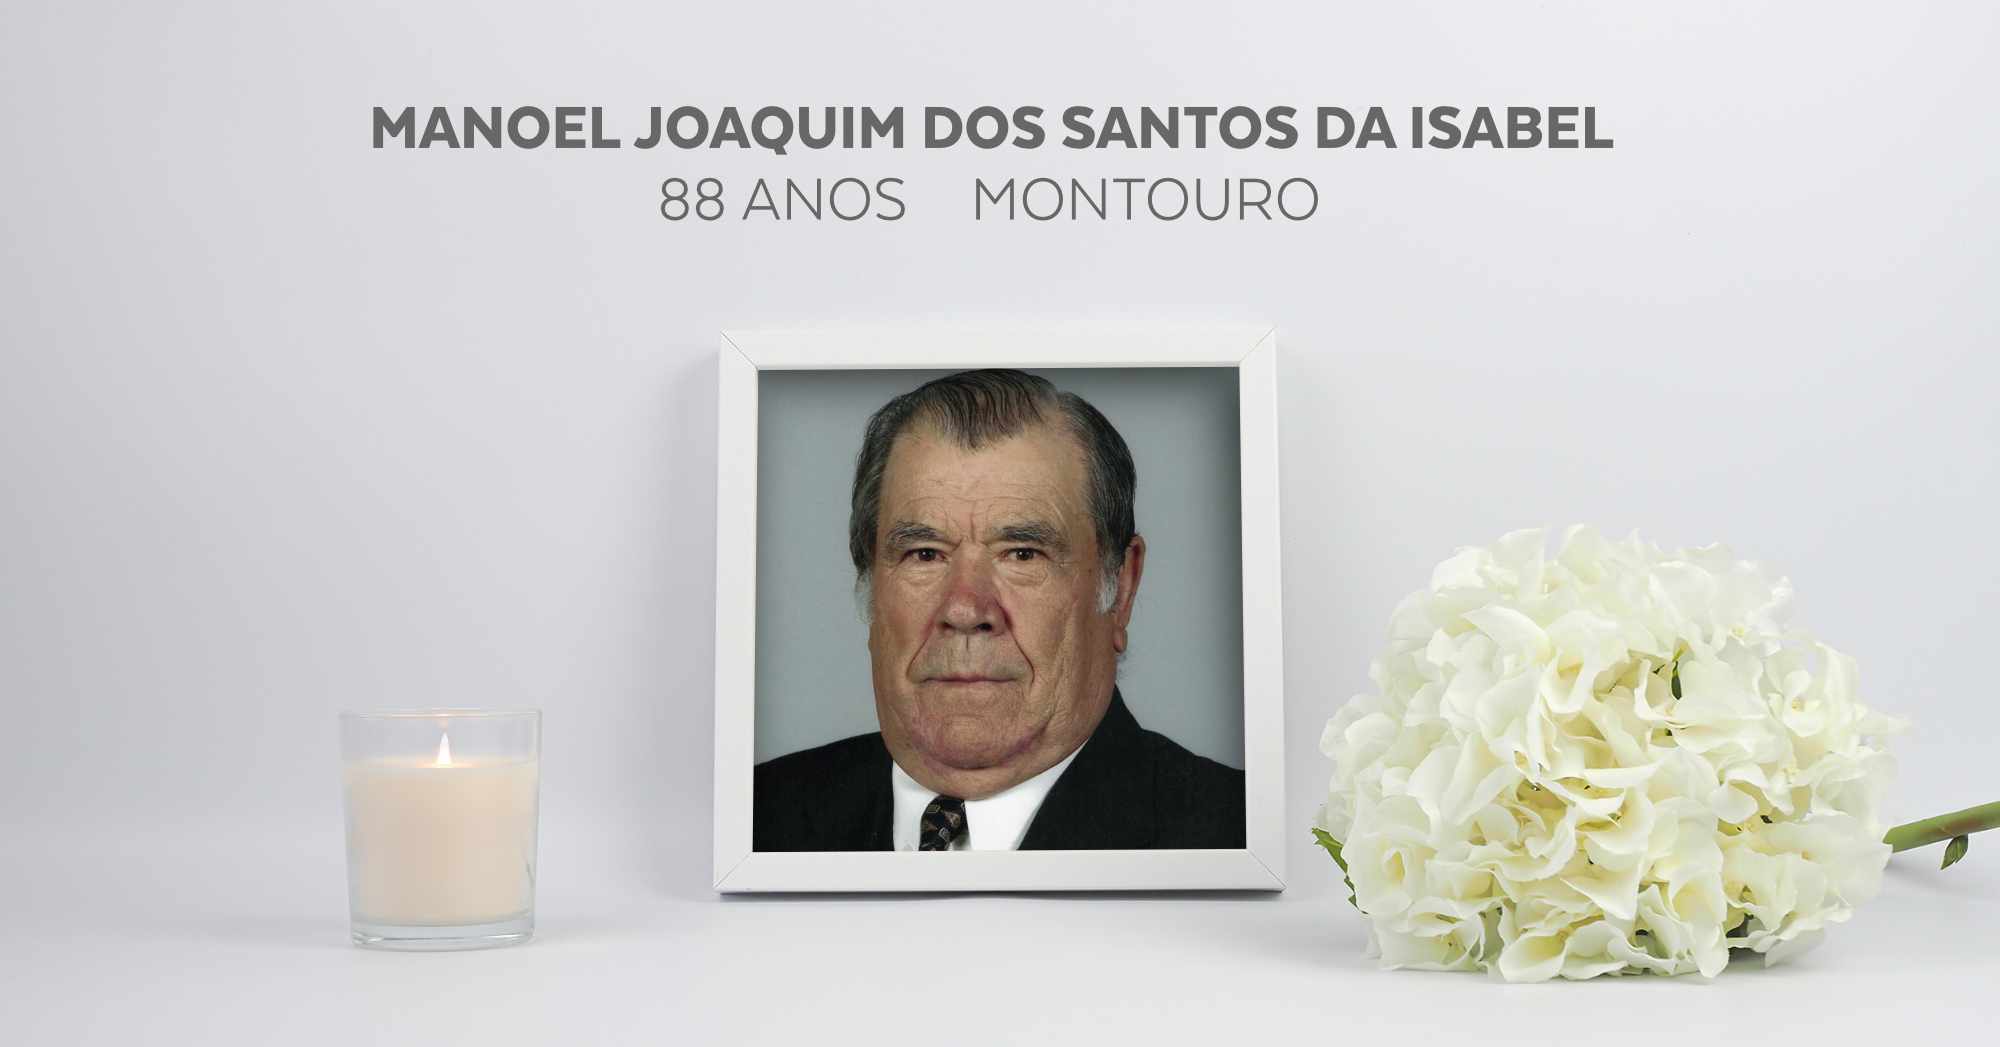 Manoel Joaquim dos Santos da Isabel